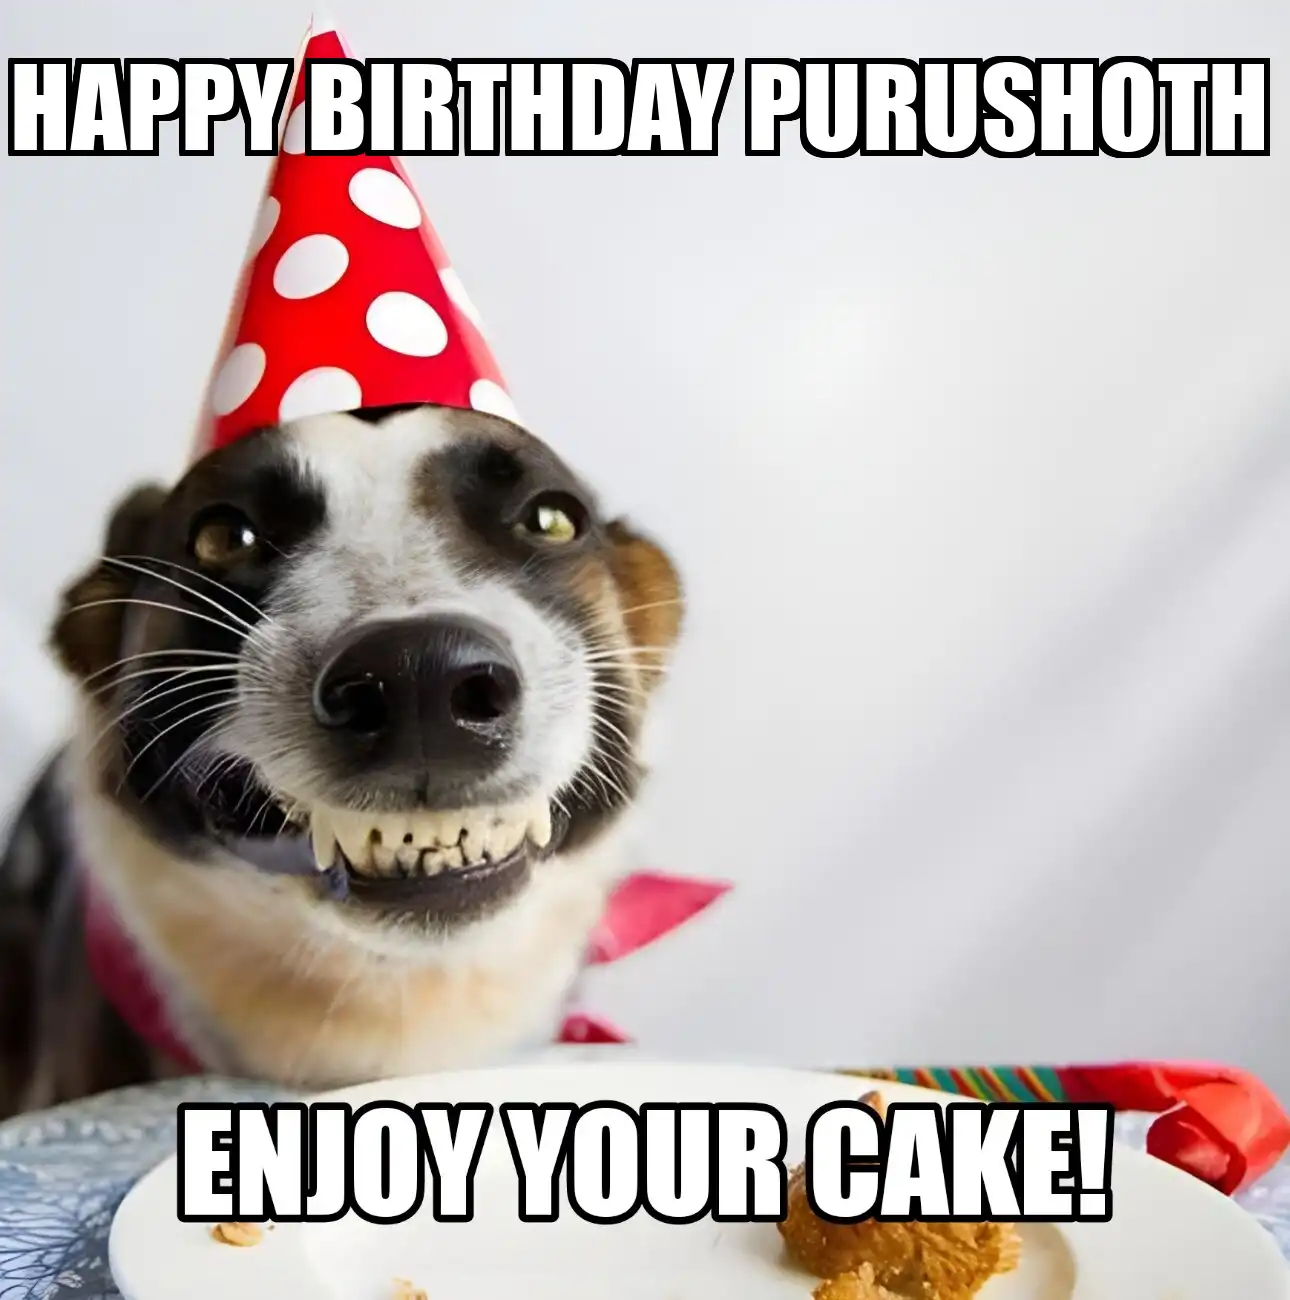 Happy Birthday Purushoth Enjoy Your Cake Dog Meme